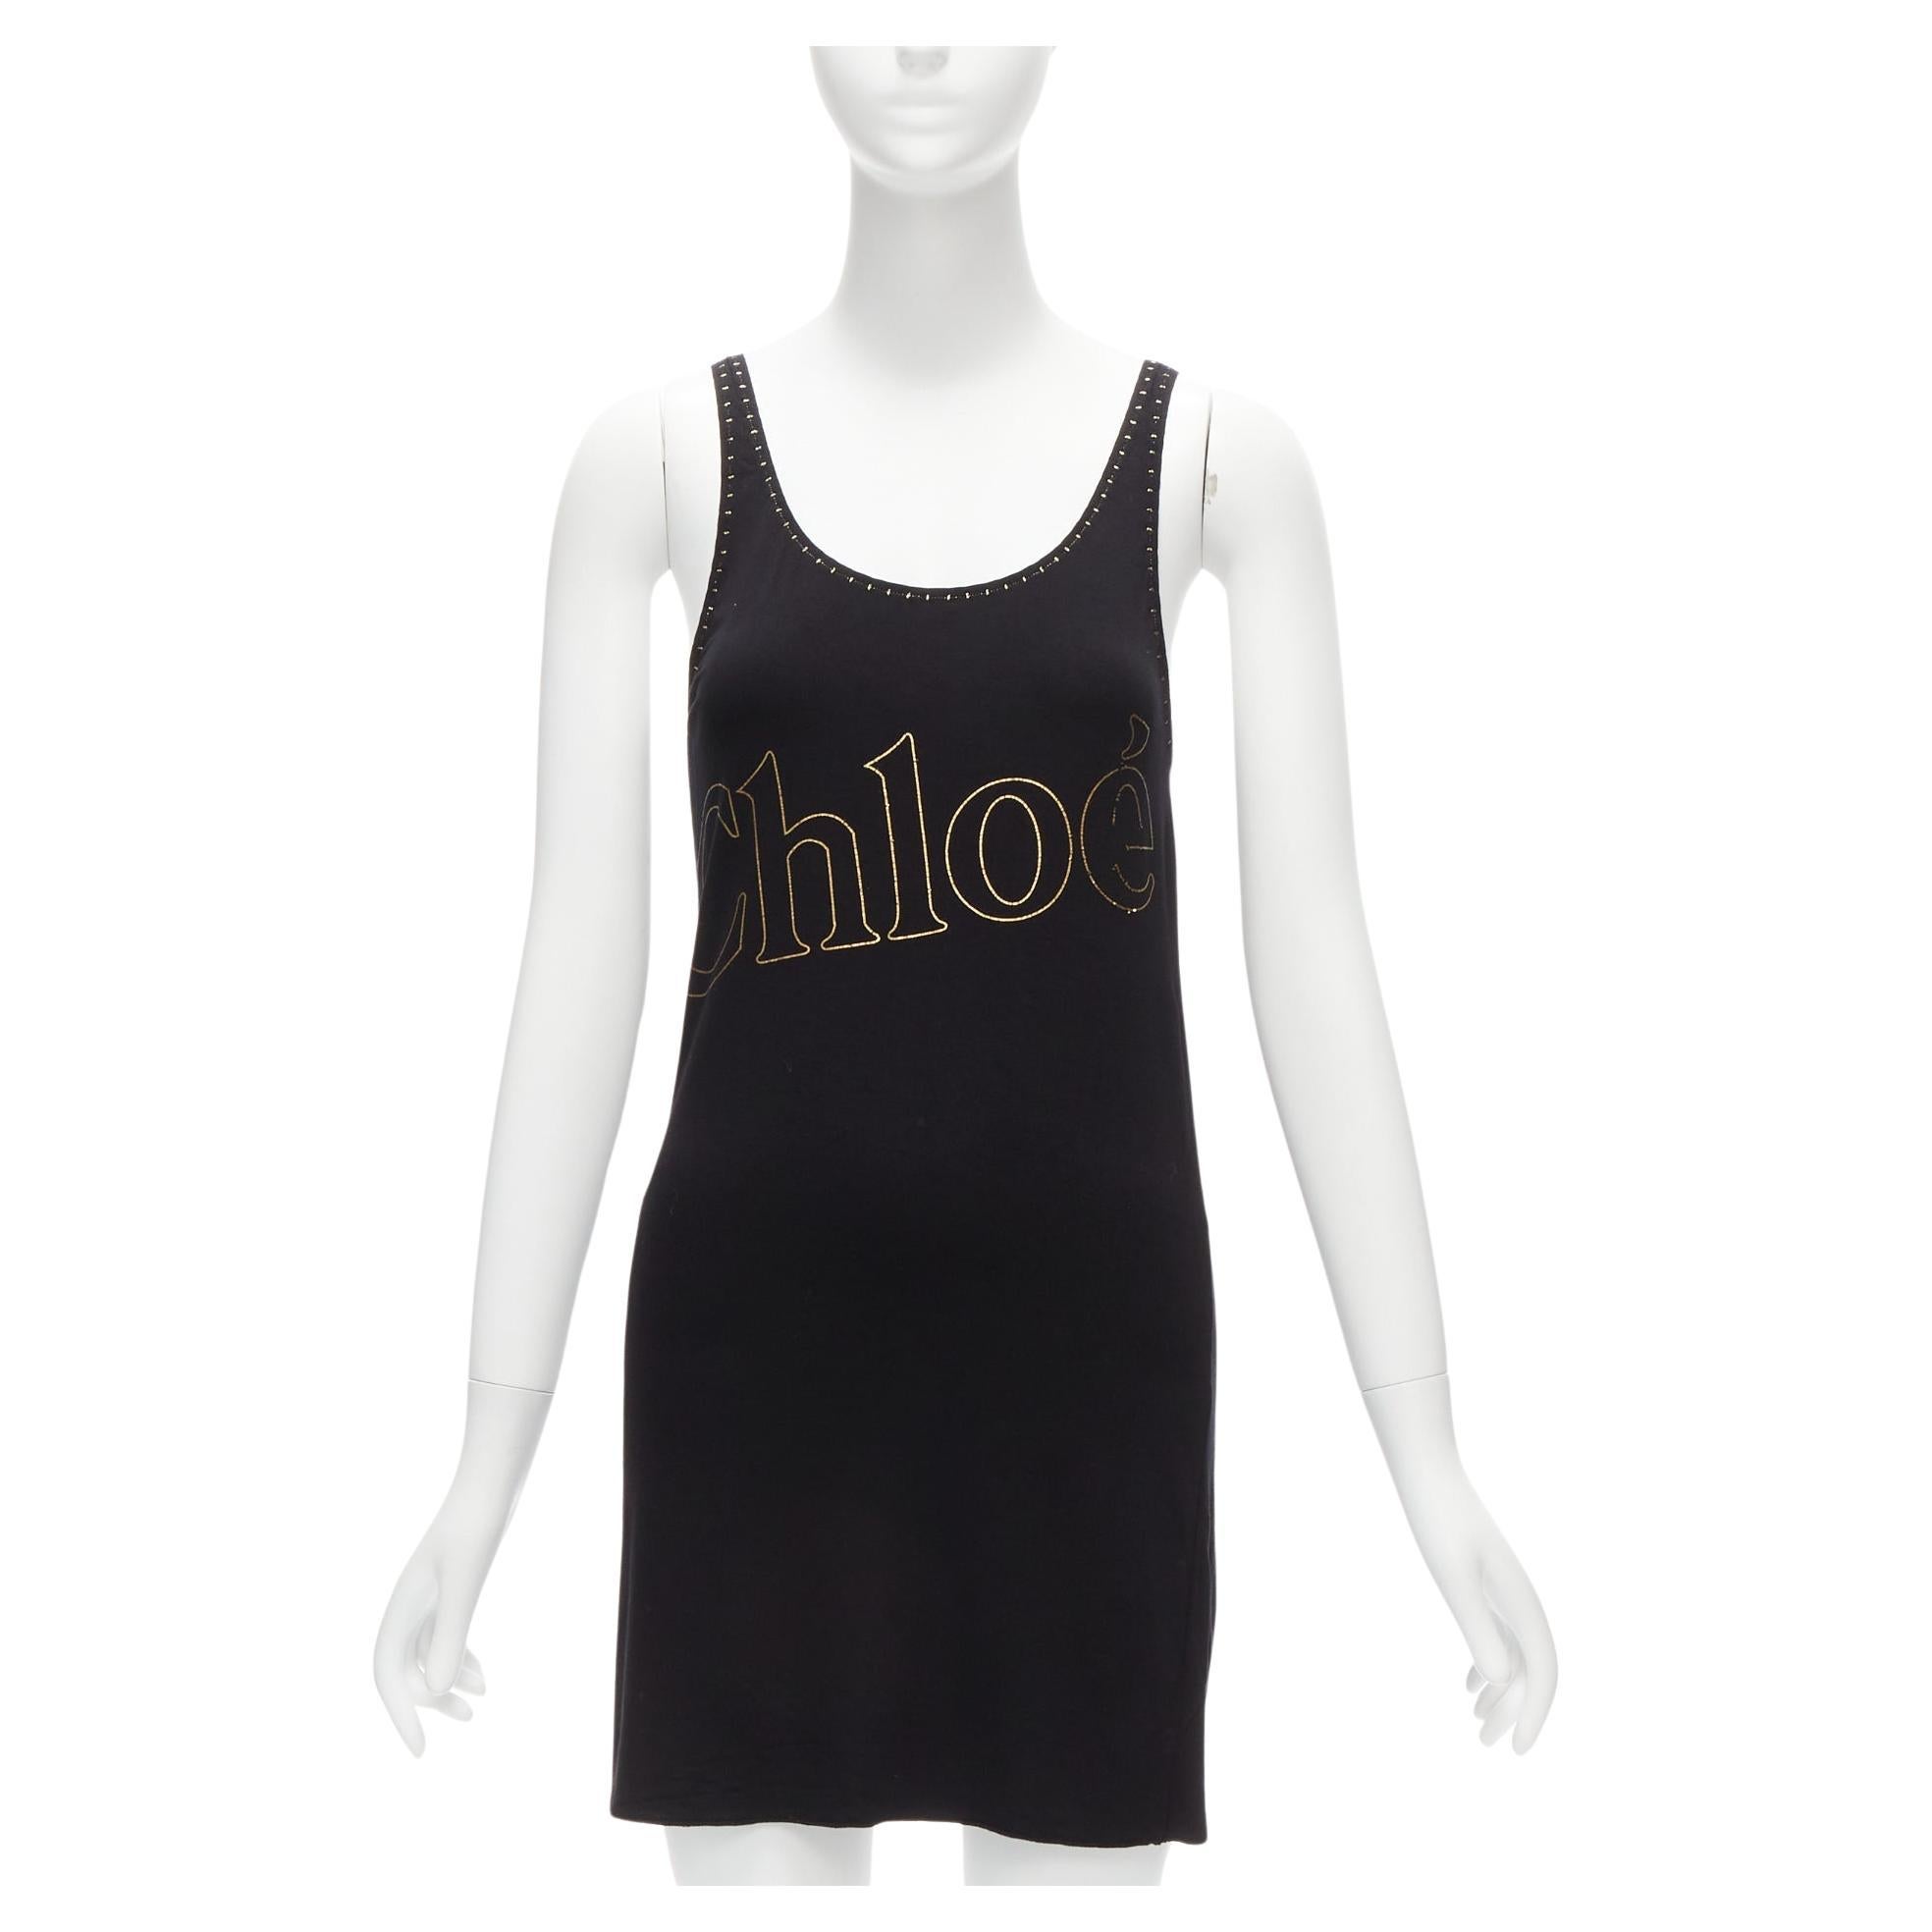 CHLOE gold foil logo black topstitch detail rock chic tank top dress S For Sale